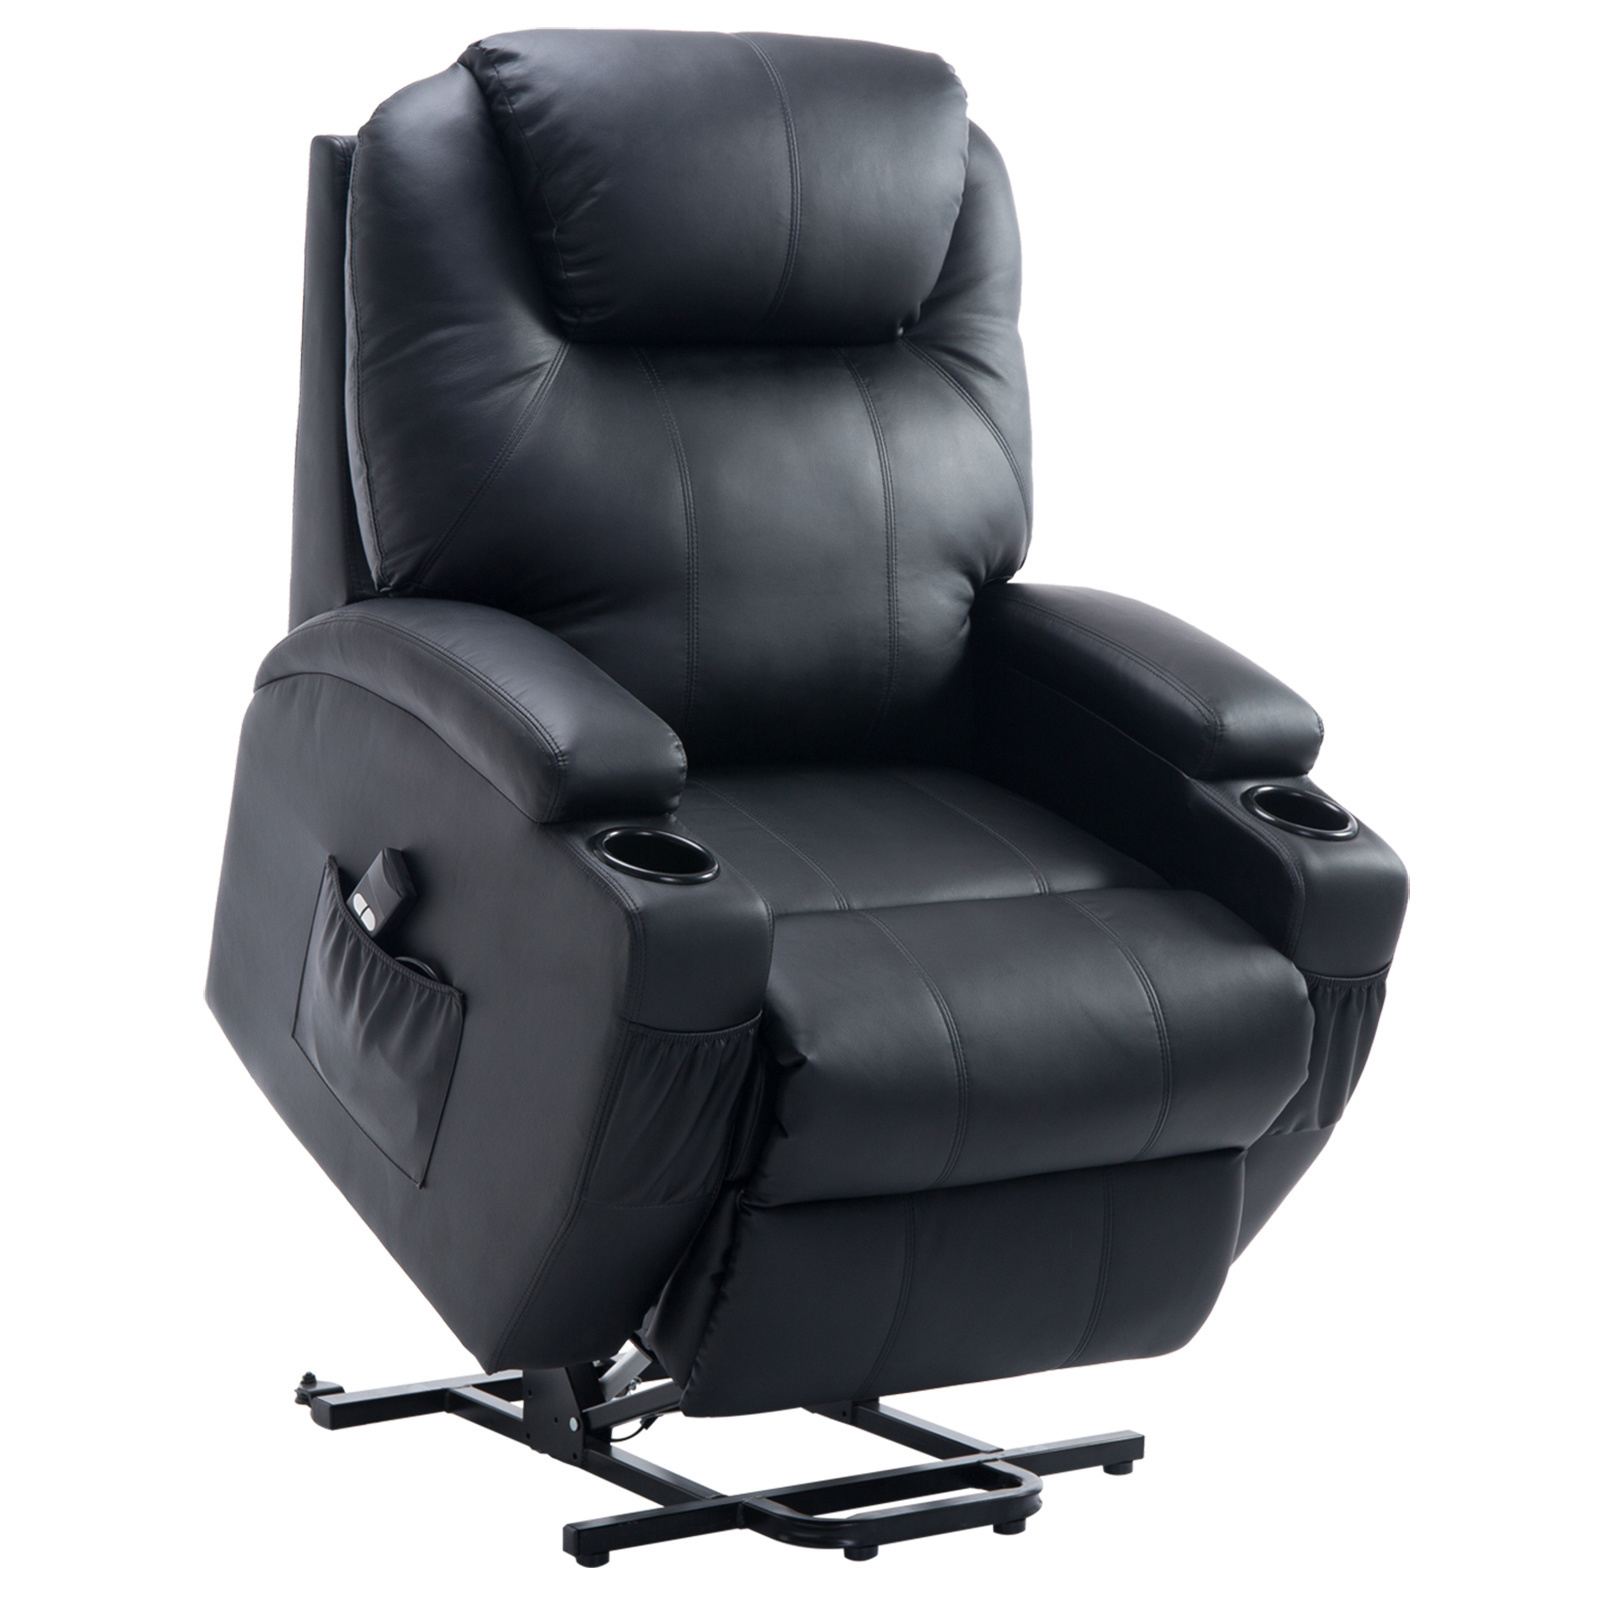 HOMdotCOM Opstahulp tv-stoel massagestoel met opstahulp zwart kunstleer